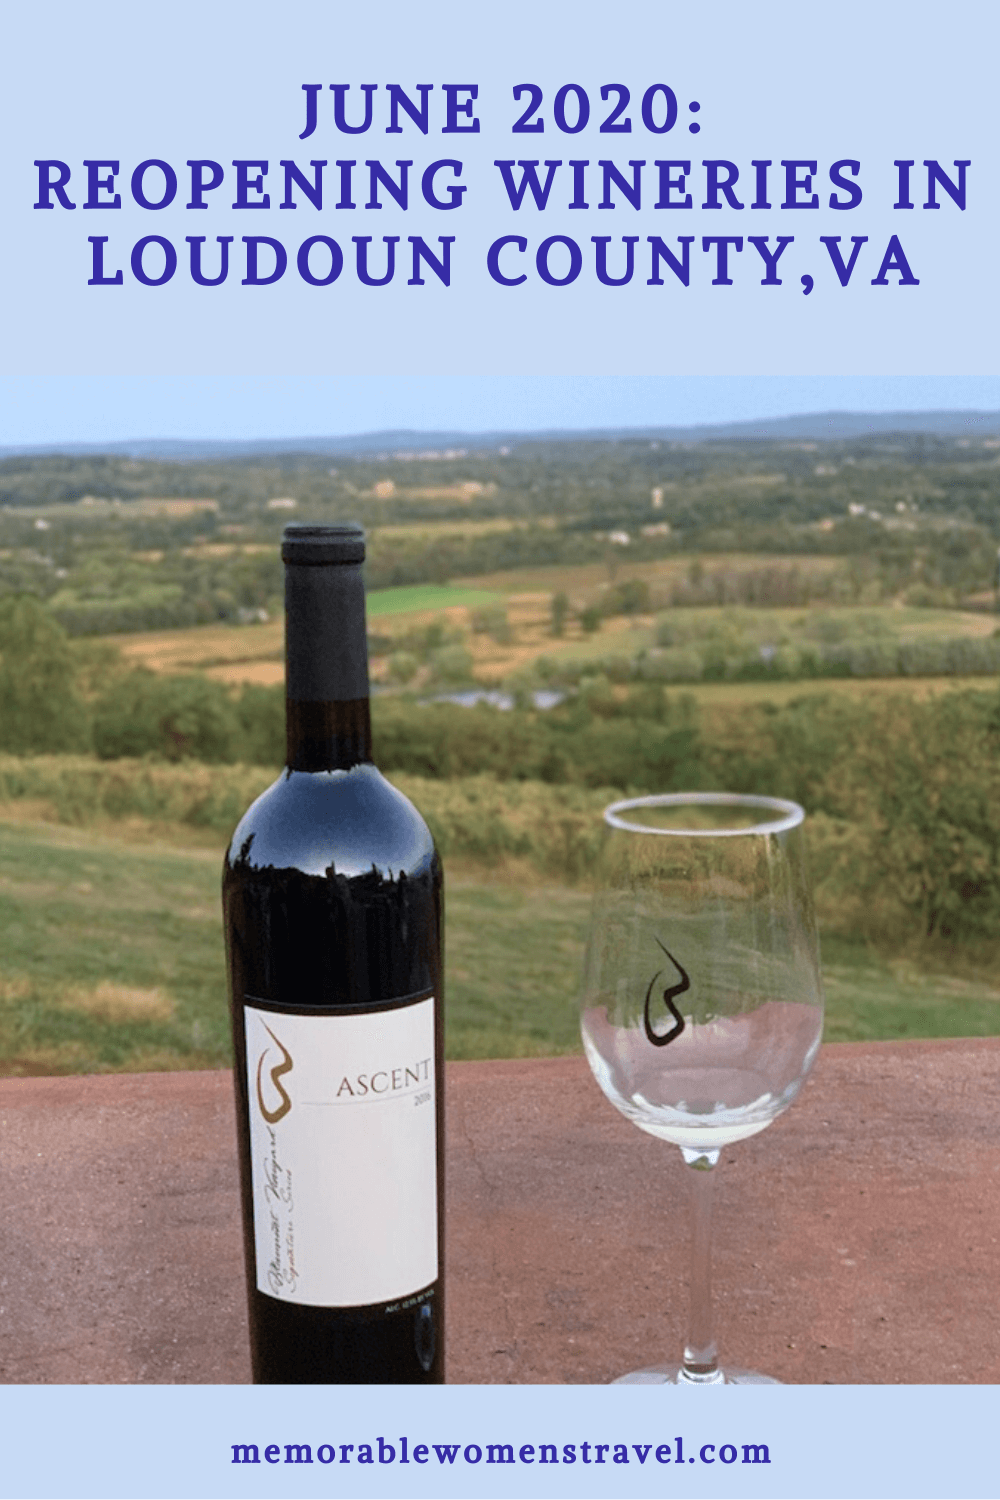 Wineries in Loudoun County: Bluemont Vineyard